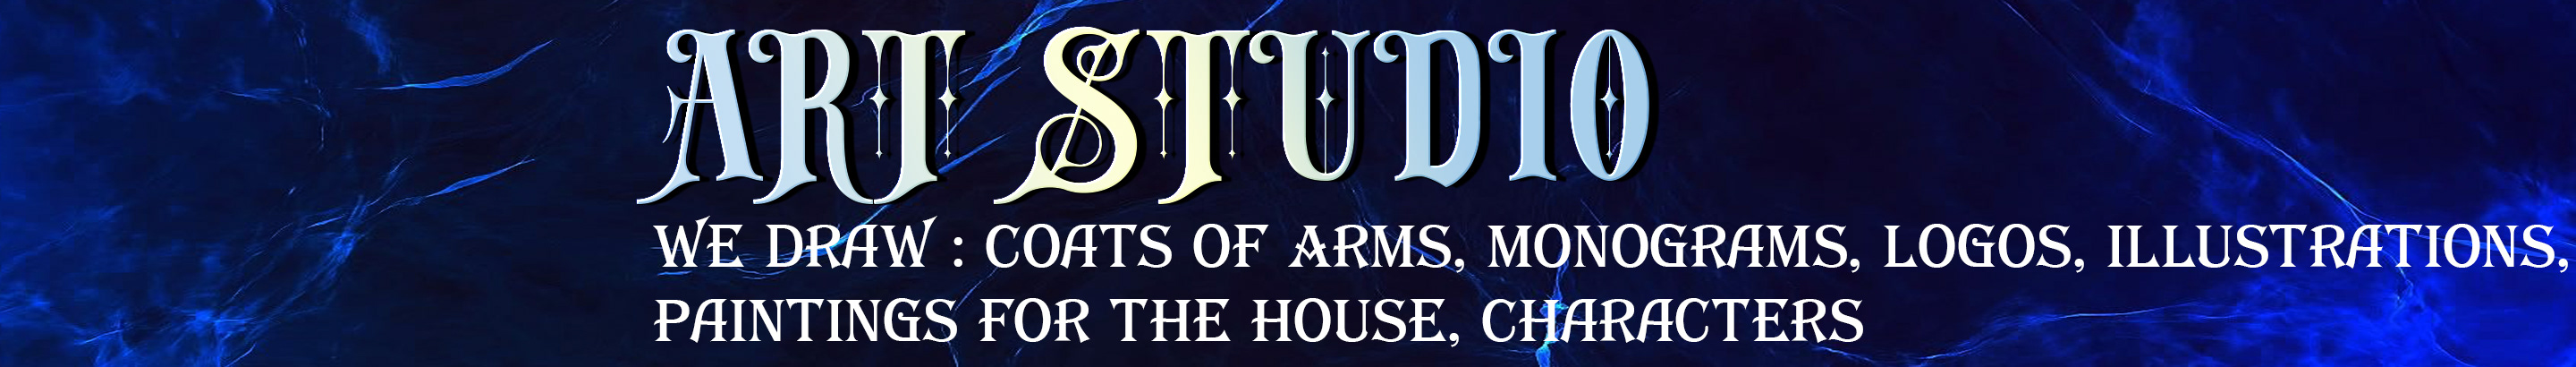 Art Studio's profile banner